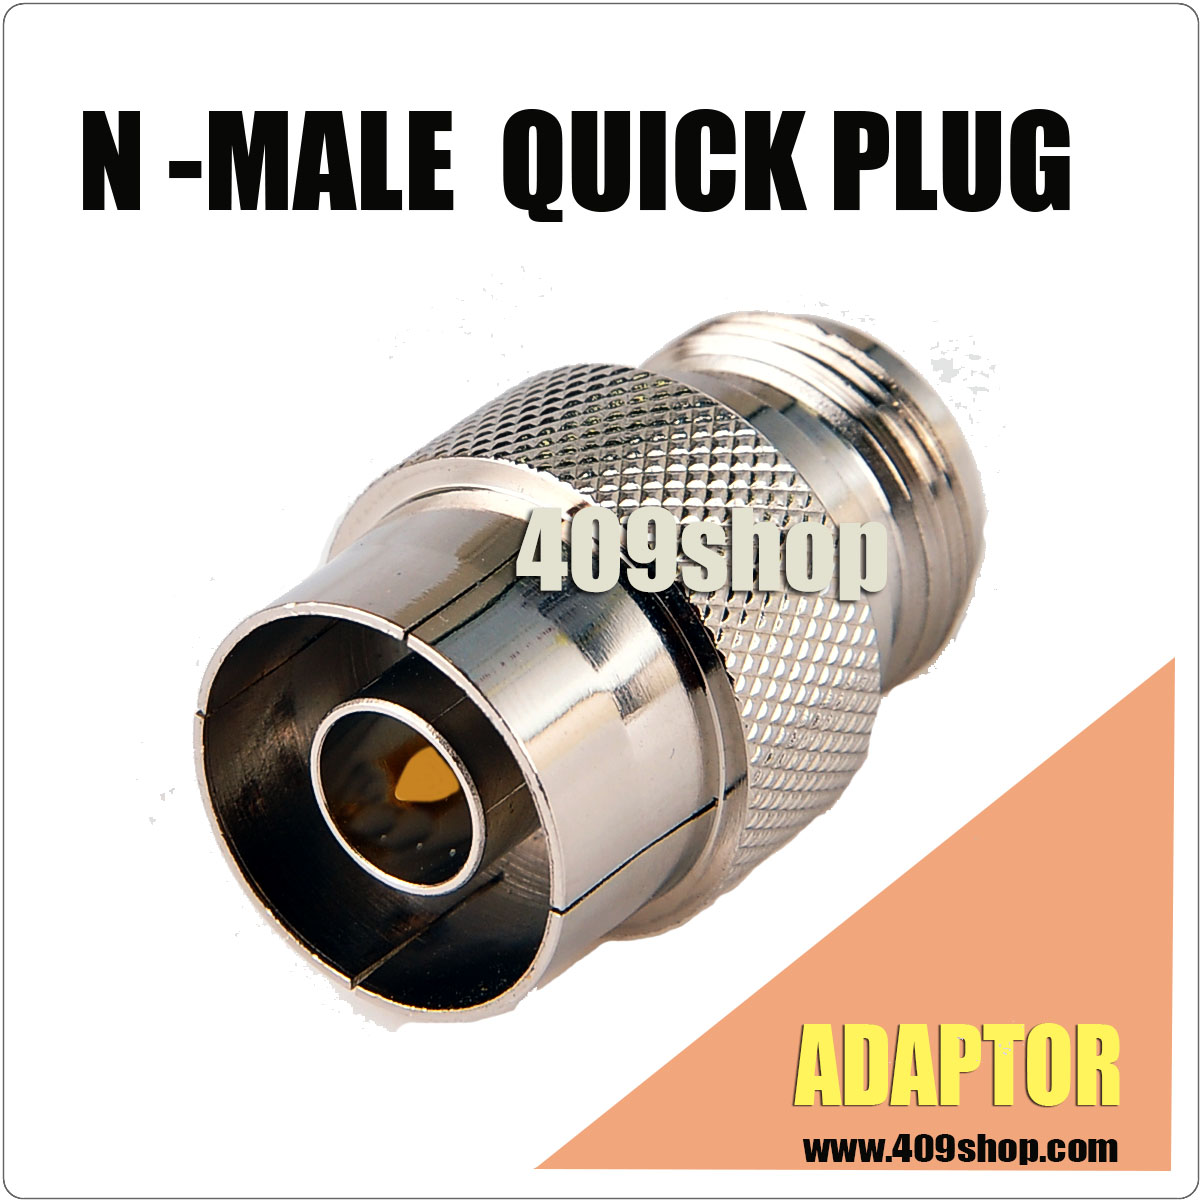 N-male quick plug